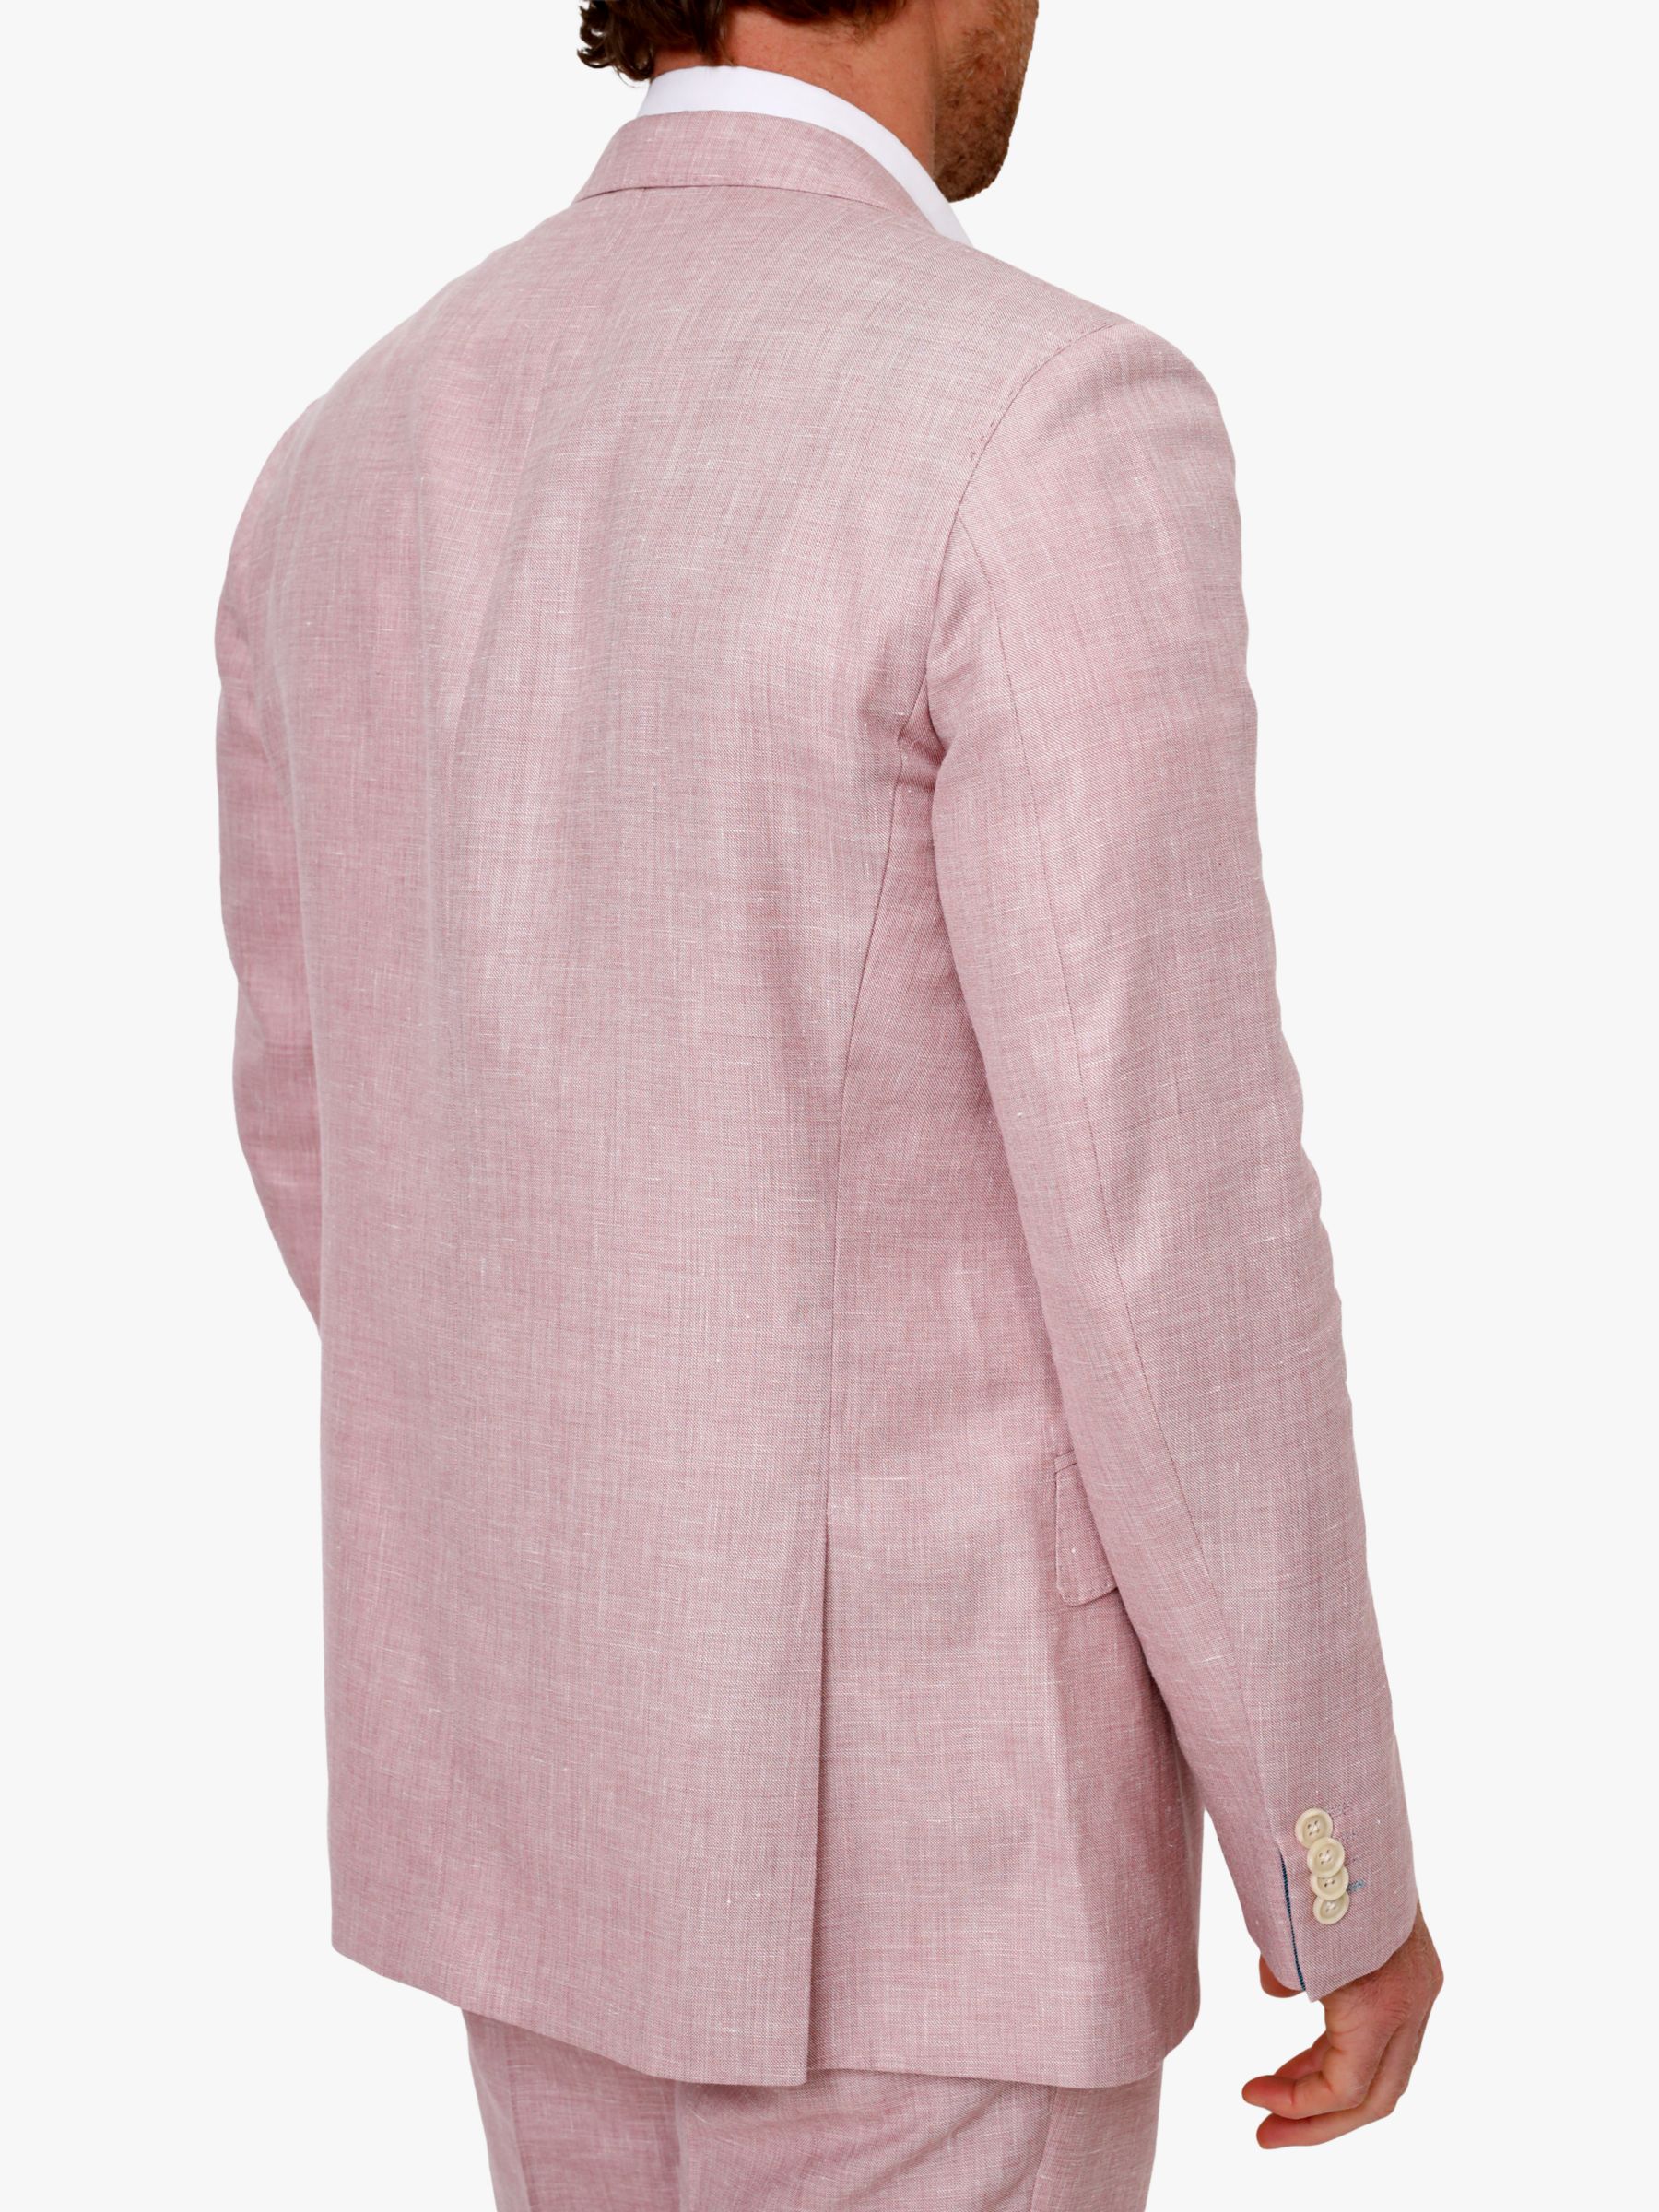 Buy KOY Linen Blend Blazer, Light Pink Online at johnlewis.com